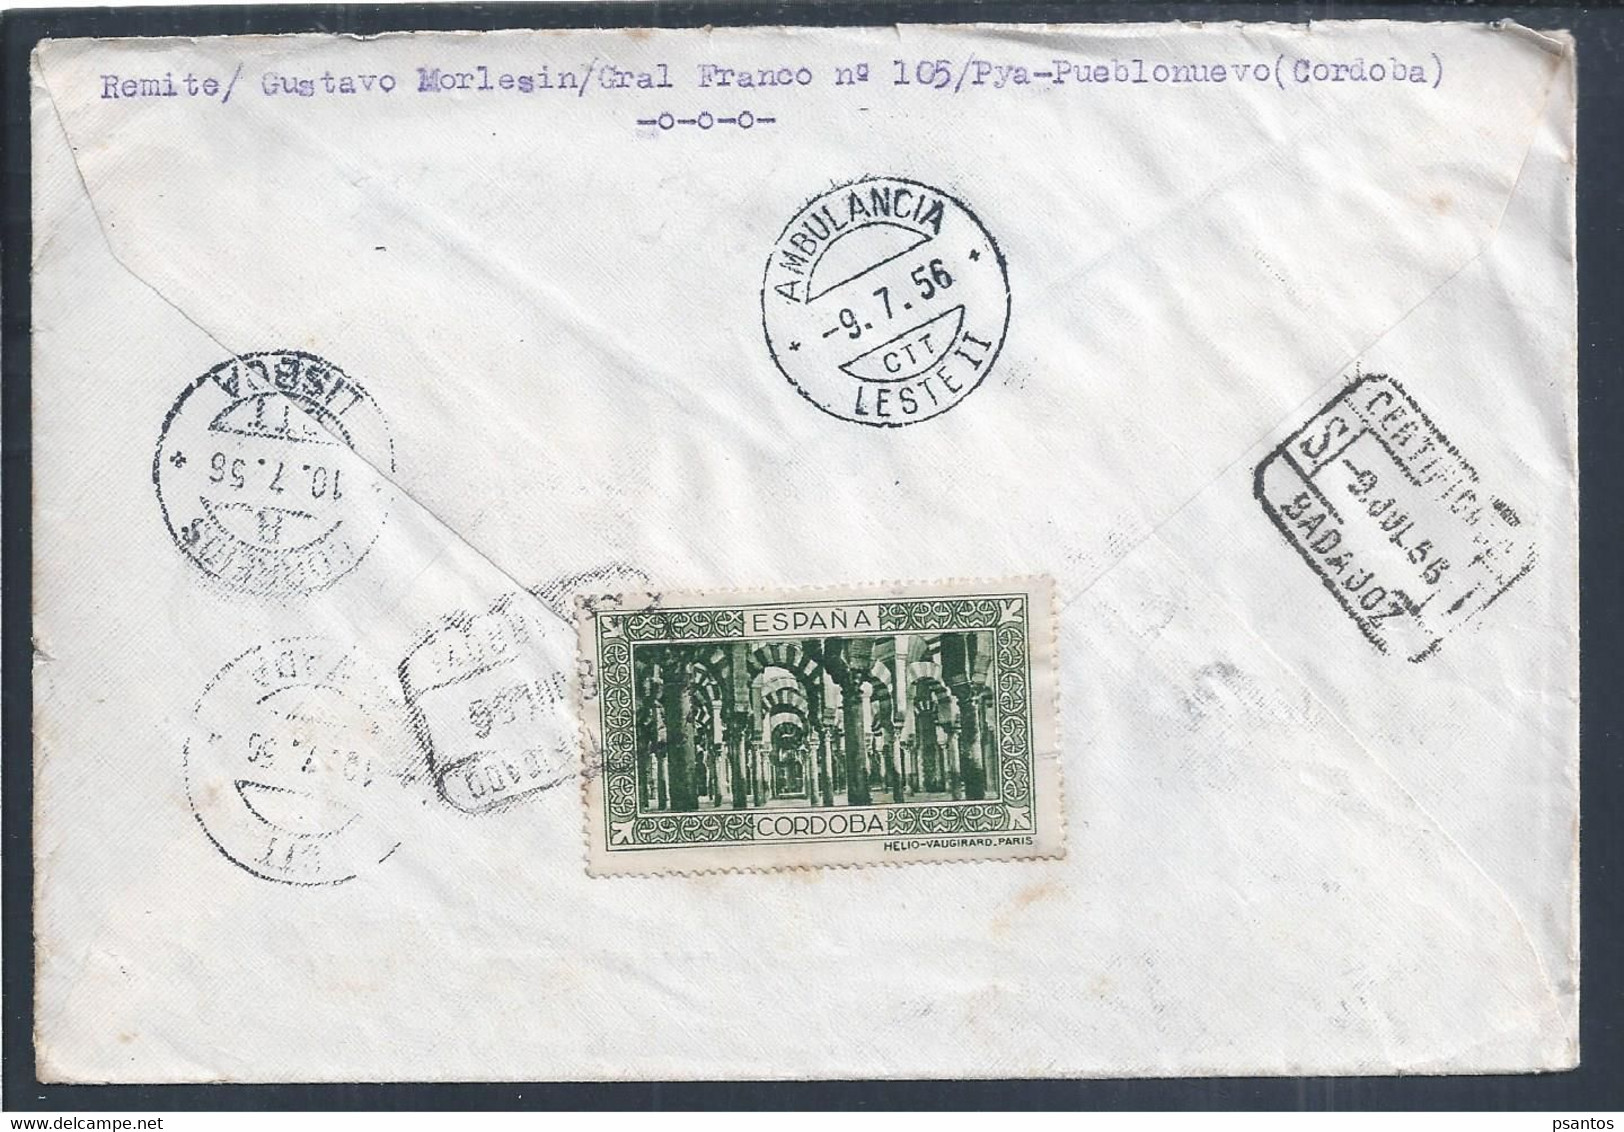 Railway Lest II Ambulanc. Stamp L Vega. Registered Letter Fuente Obejuna1956. Ignatius Liola. Vignette Cordoba. Rare - Covers & Documents